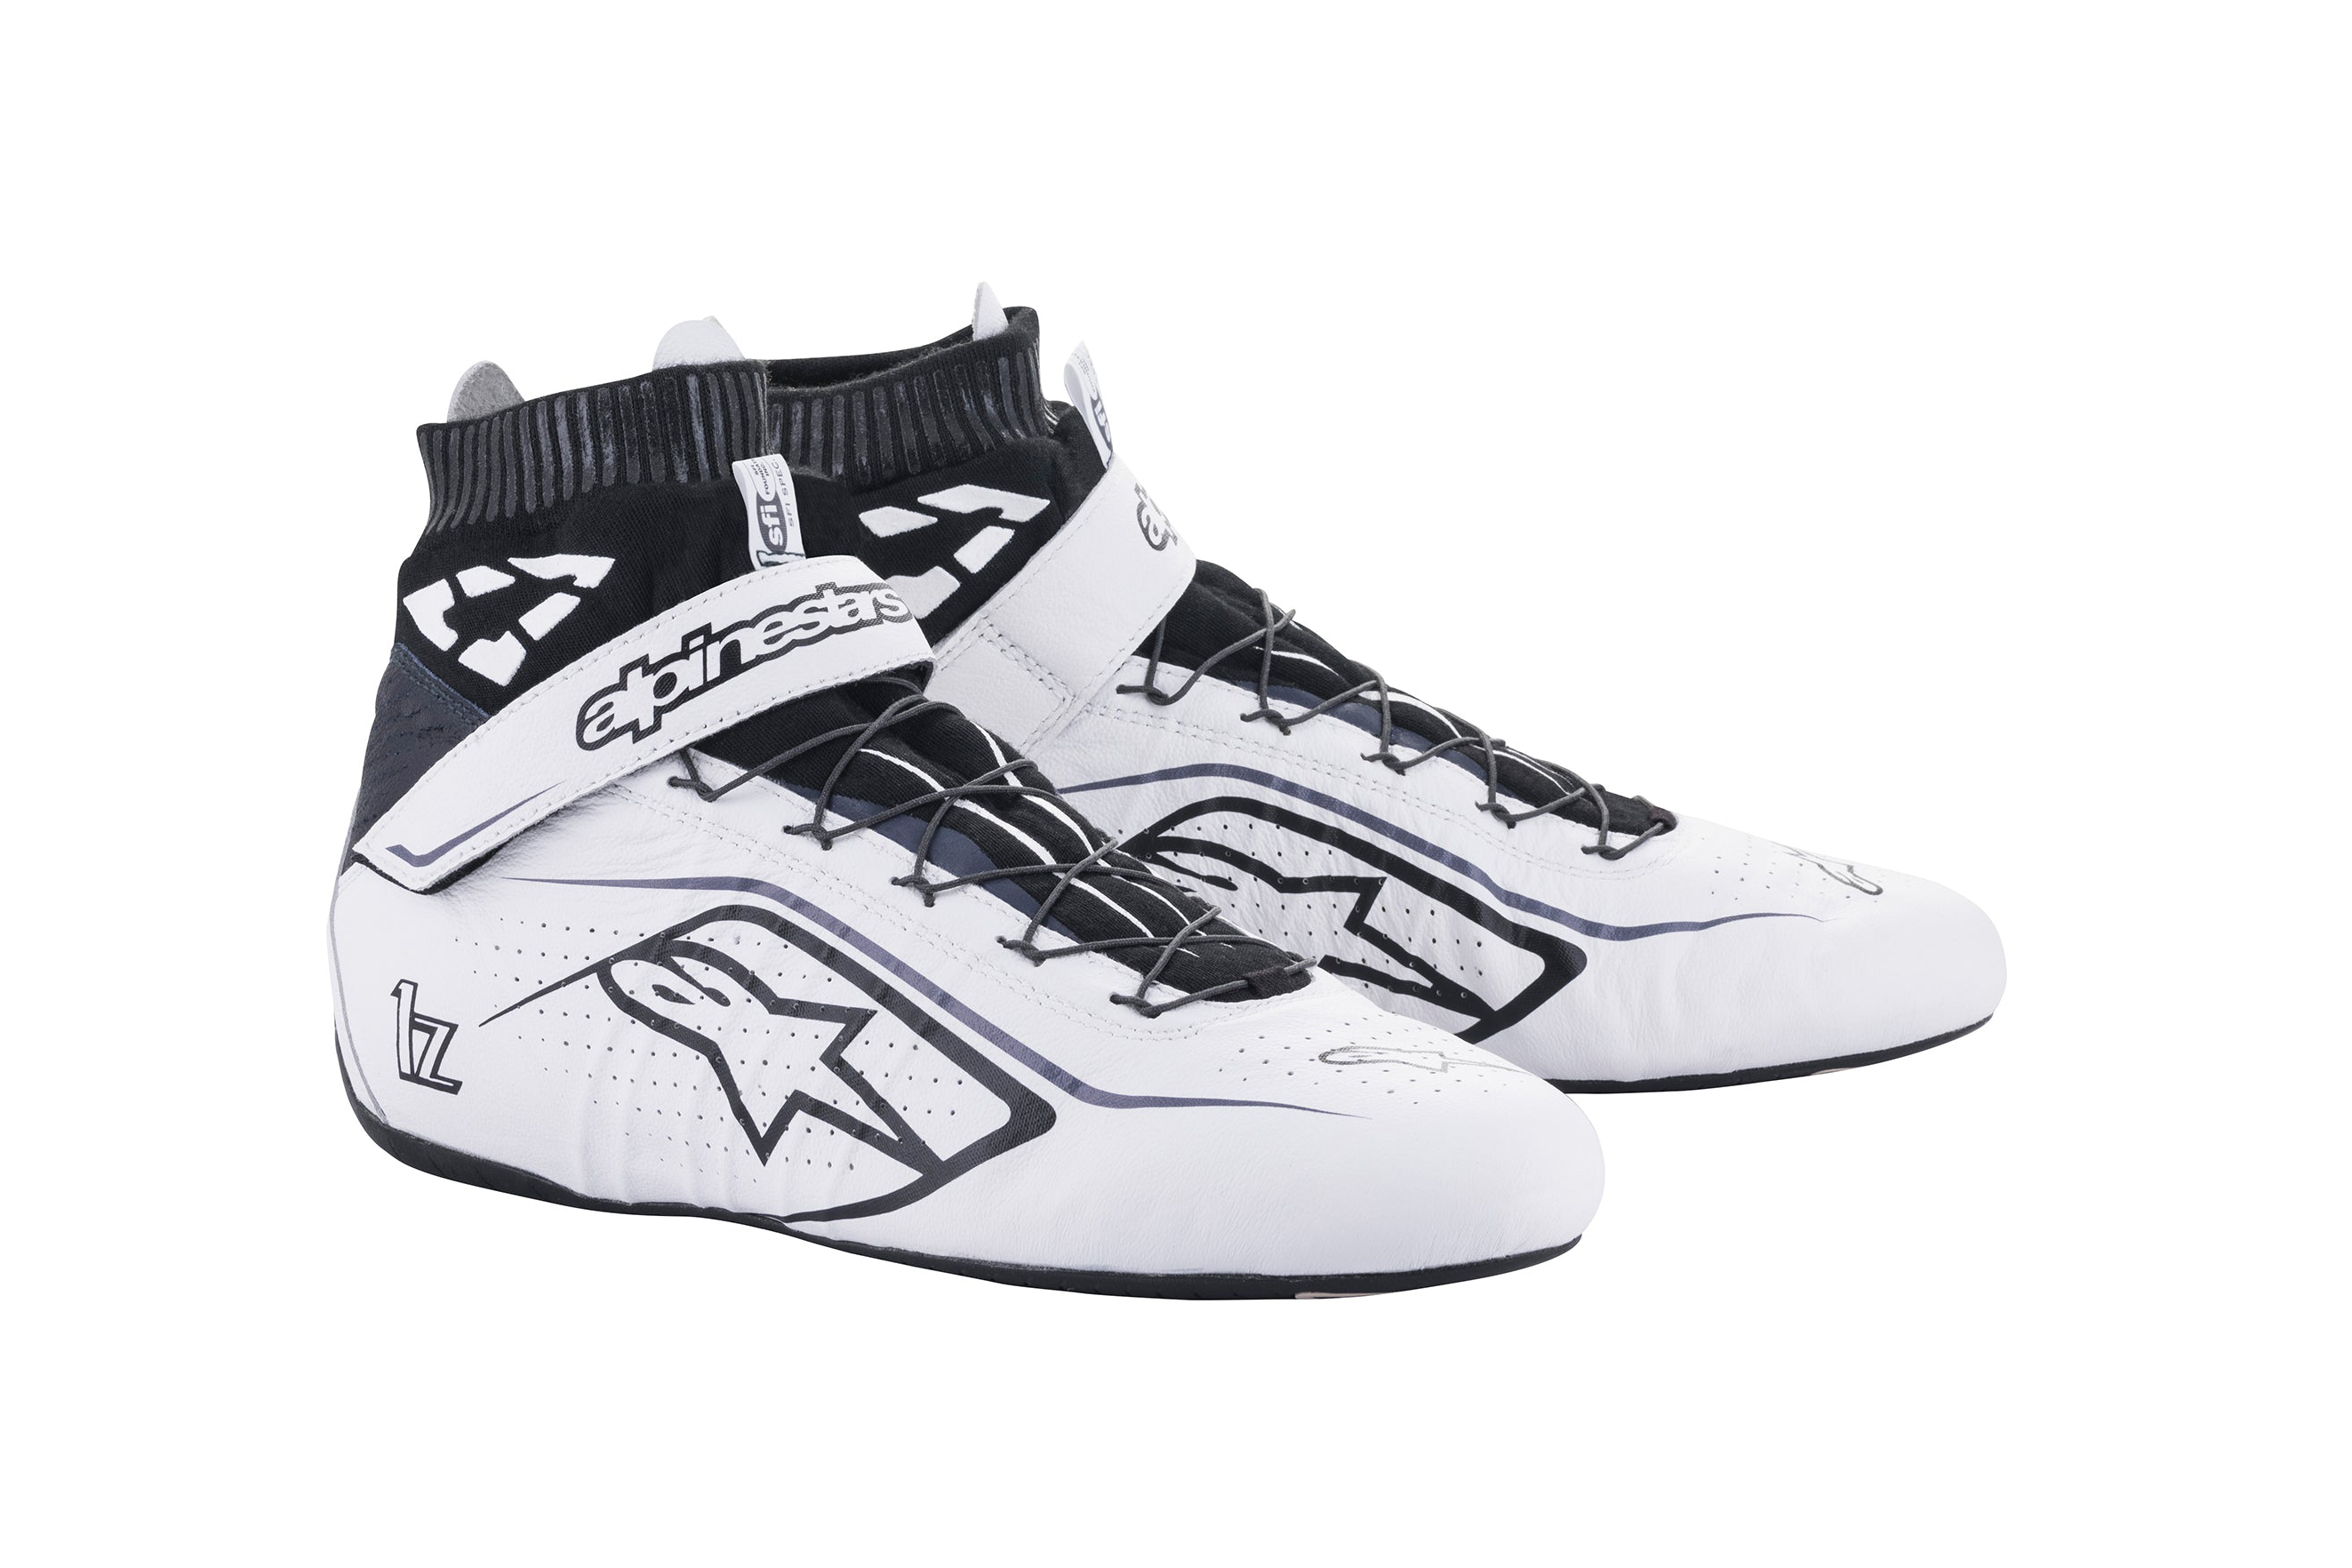 Tech 1-Z V2 Driving Shoes SFI Size 7.5 Black/White/Orange Fluorescent 2715120-1241-7.5 2020 Model 